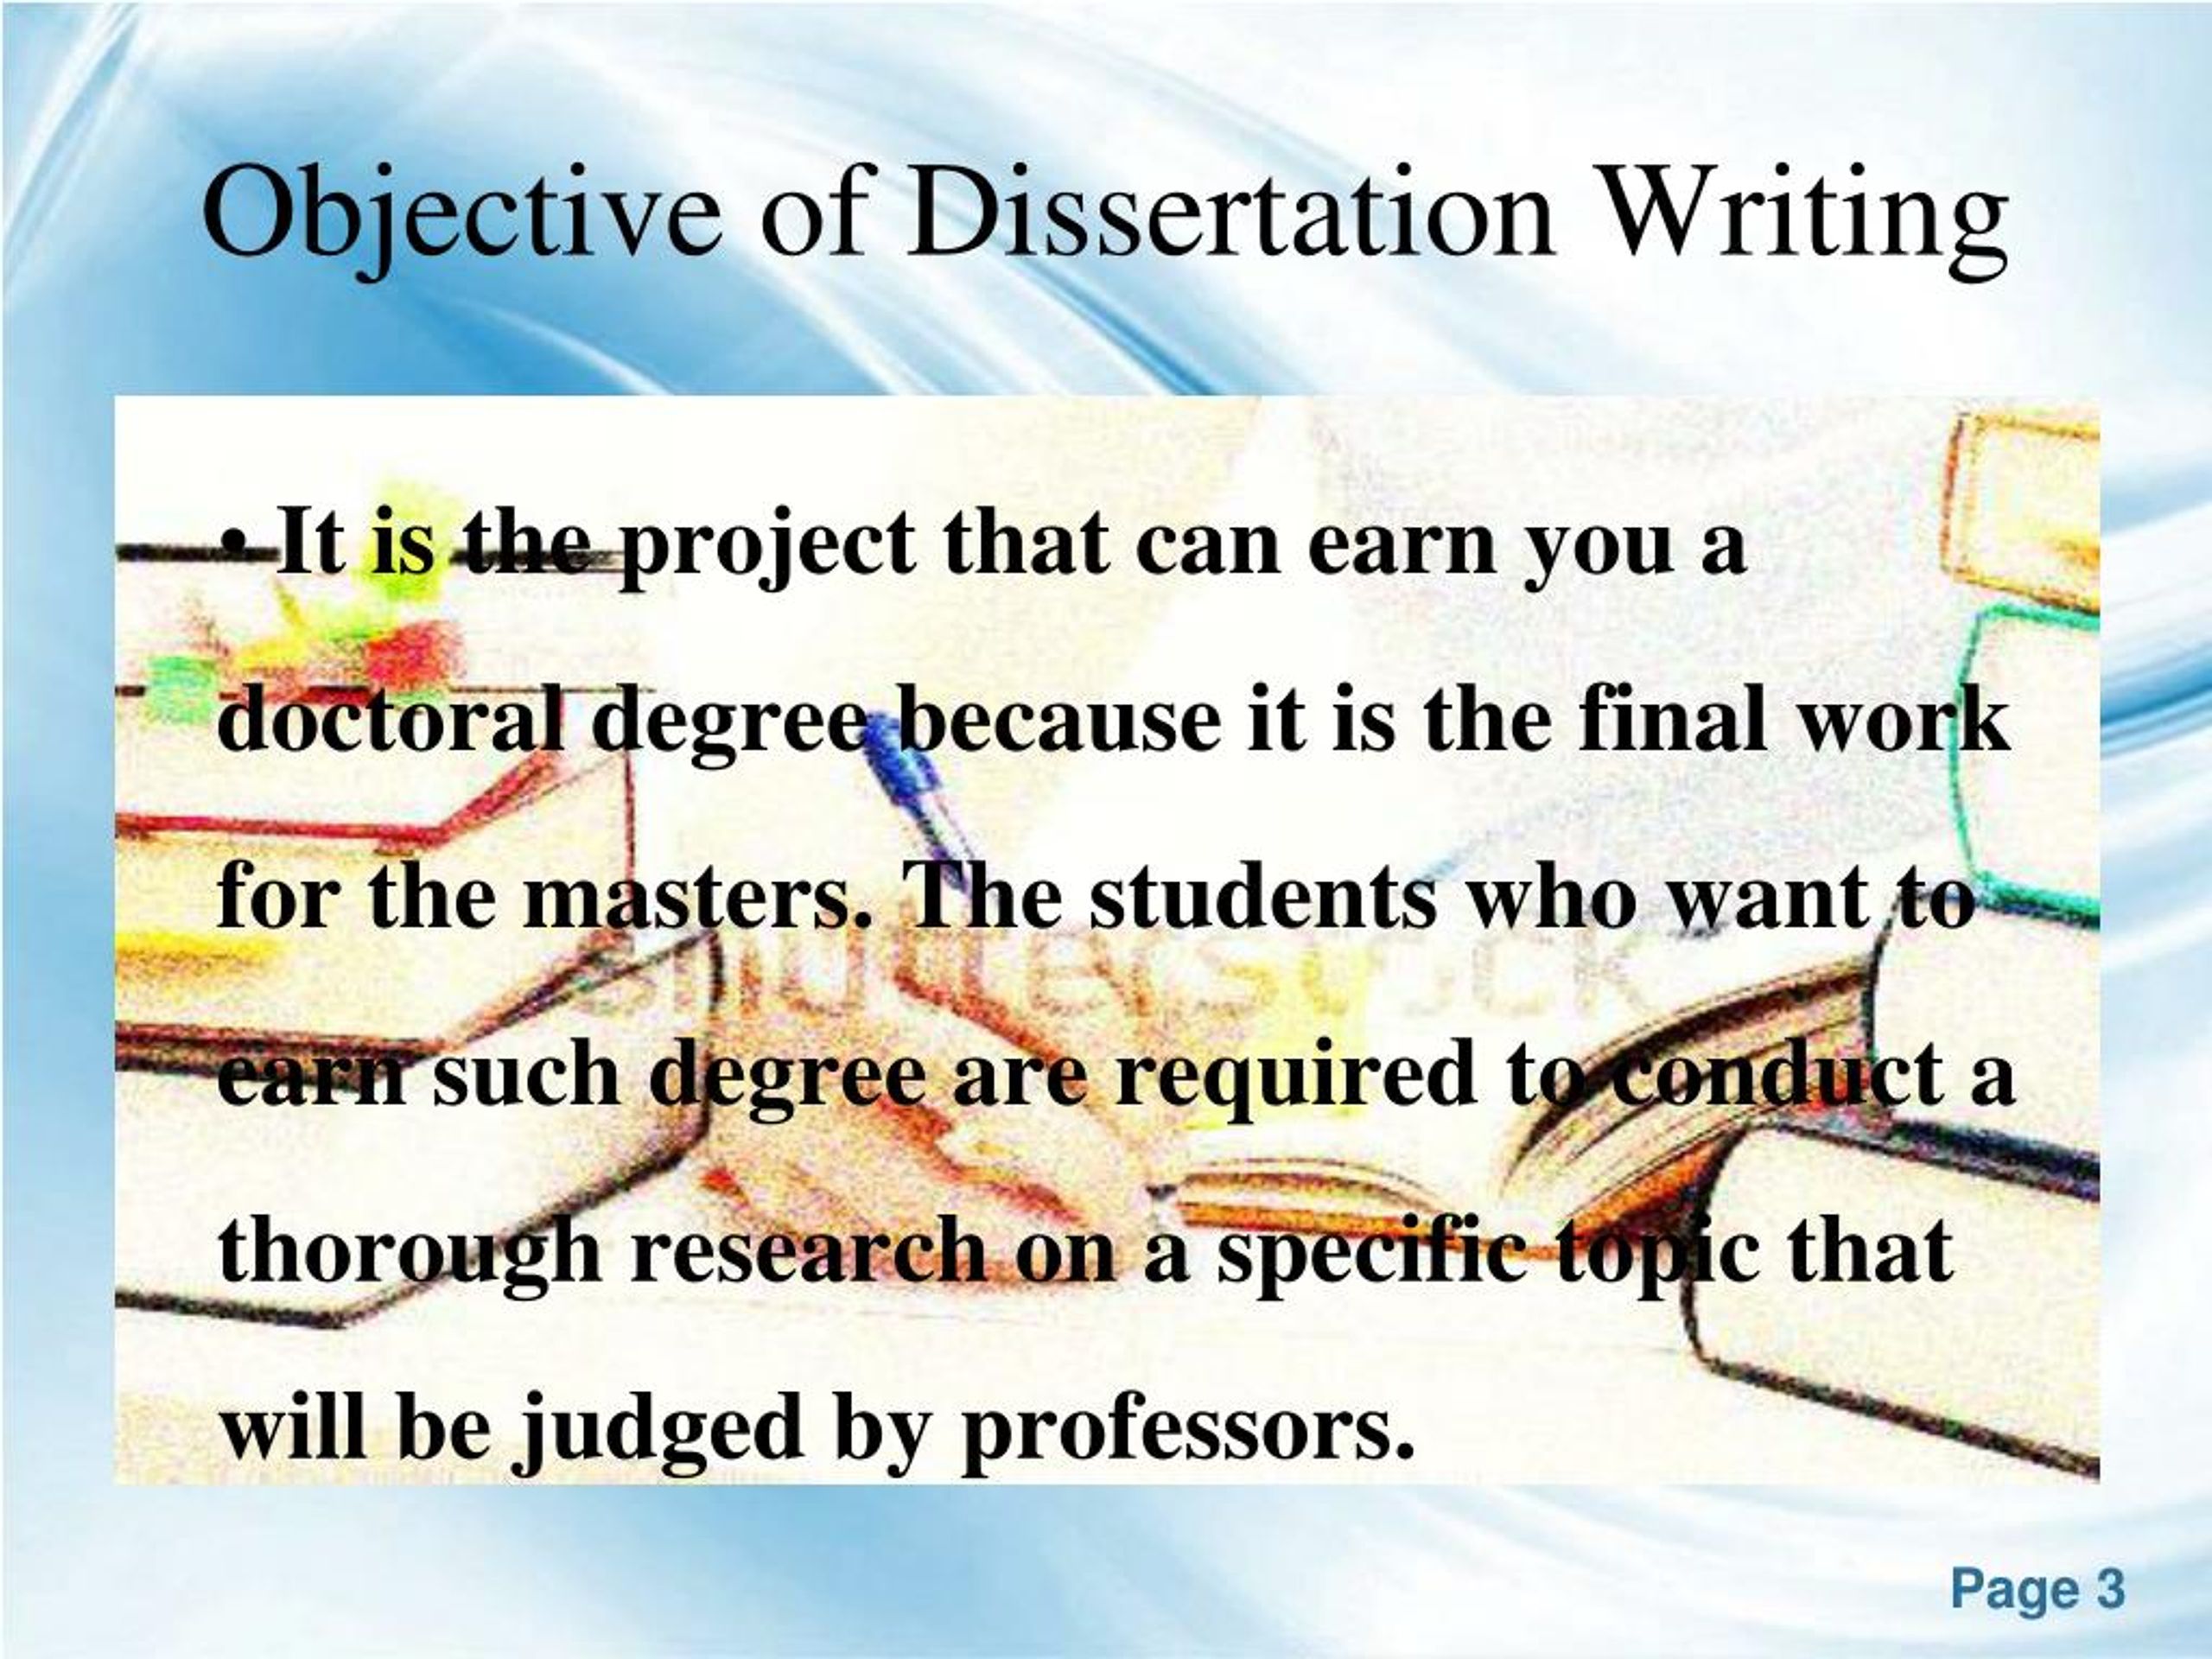 dissertation a definition